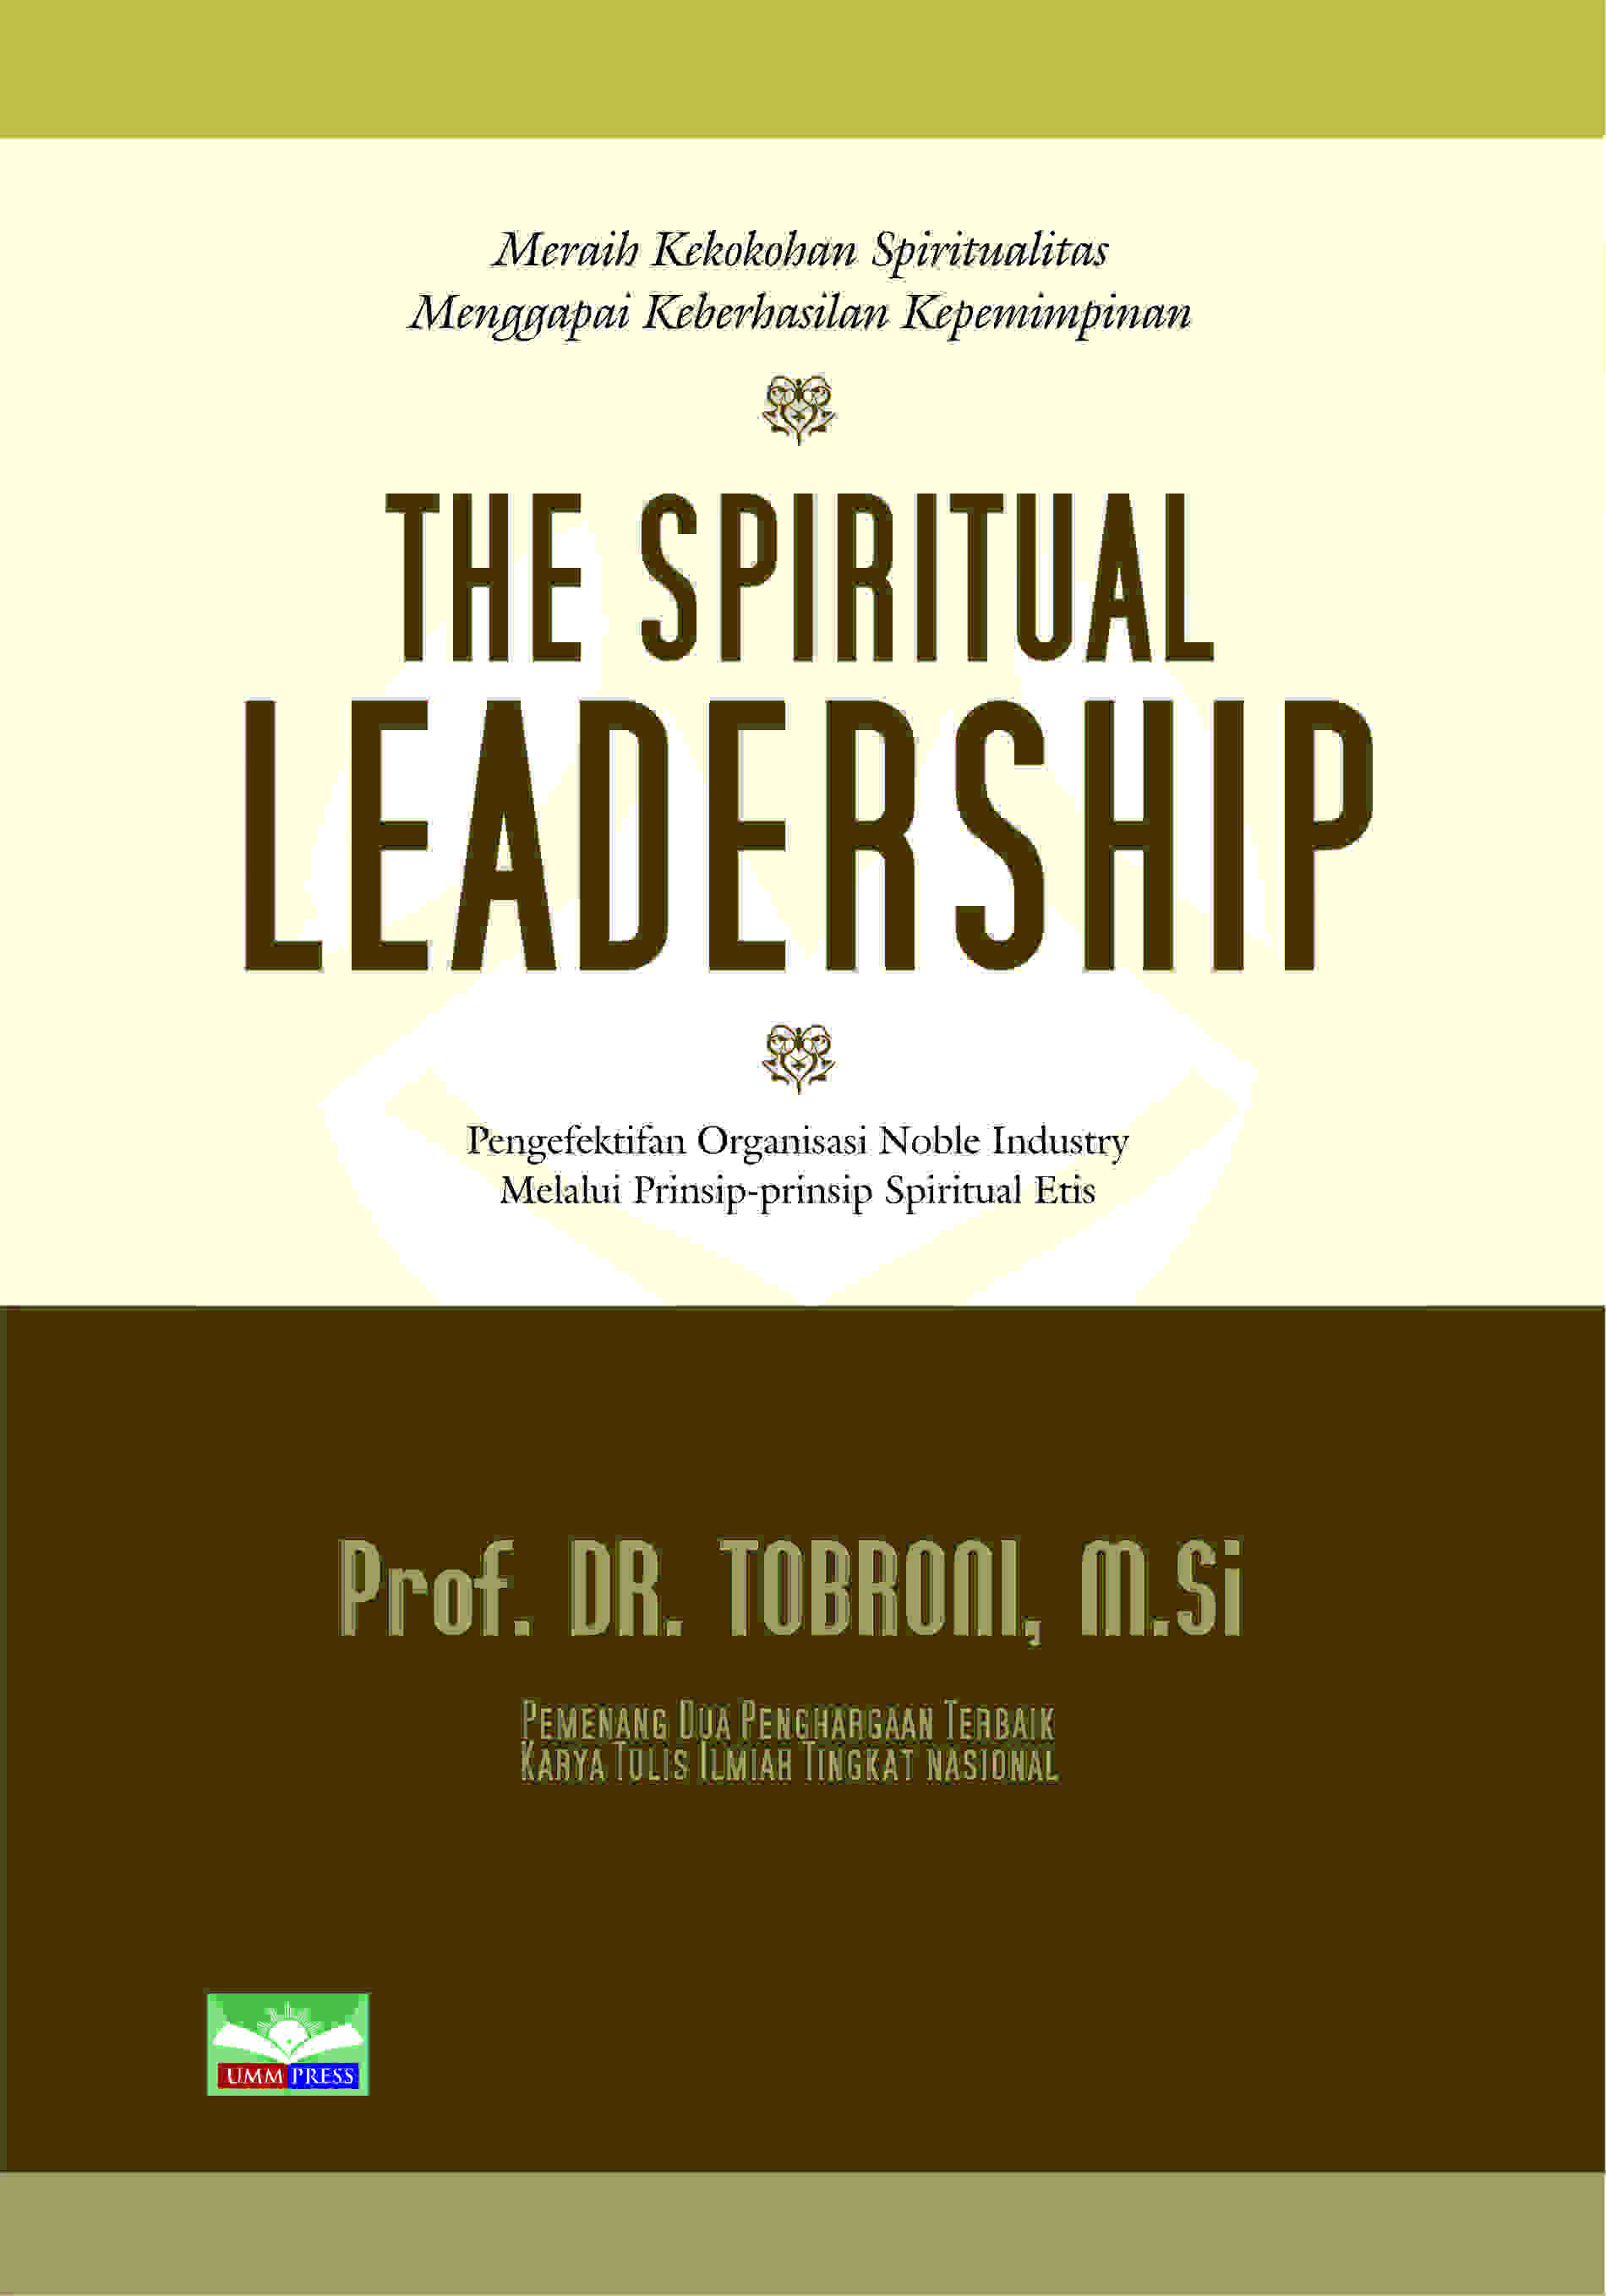 THE SPIRITUAL LEADERSHIP: PENGEFEKTIFAN NOBLE INDUSTY MELALUI PRINSIP-PRINSIP SPIRITUAL ETIS